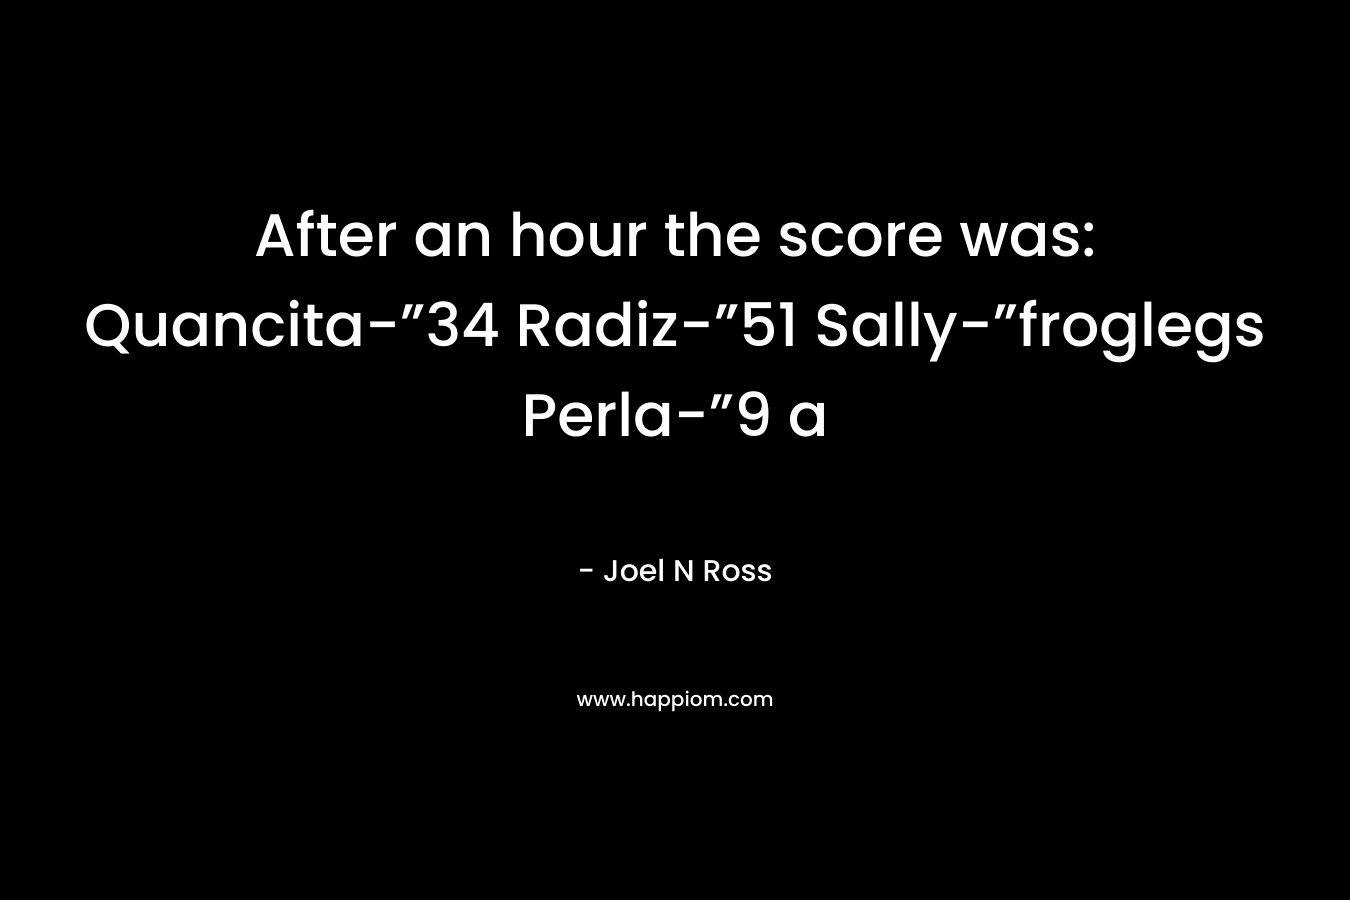 After an hour the score was: Quancita-”34 Radiz-”51 Sally-”froglegs Perla-”9 a